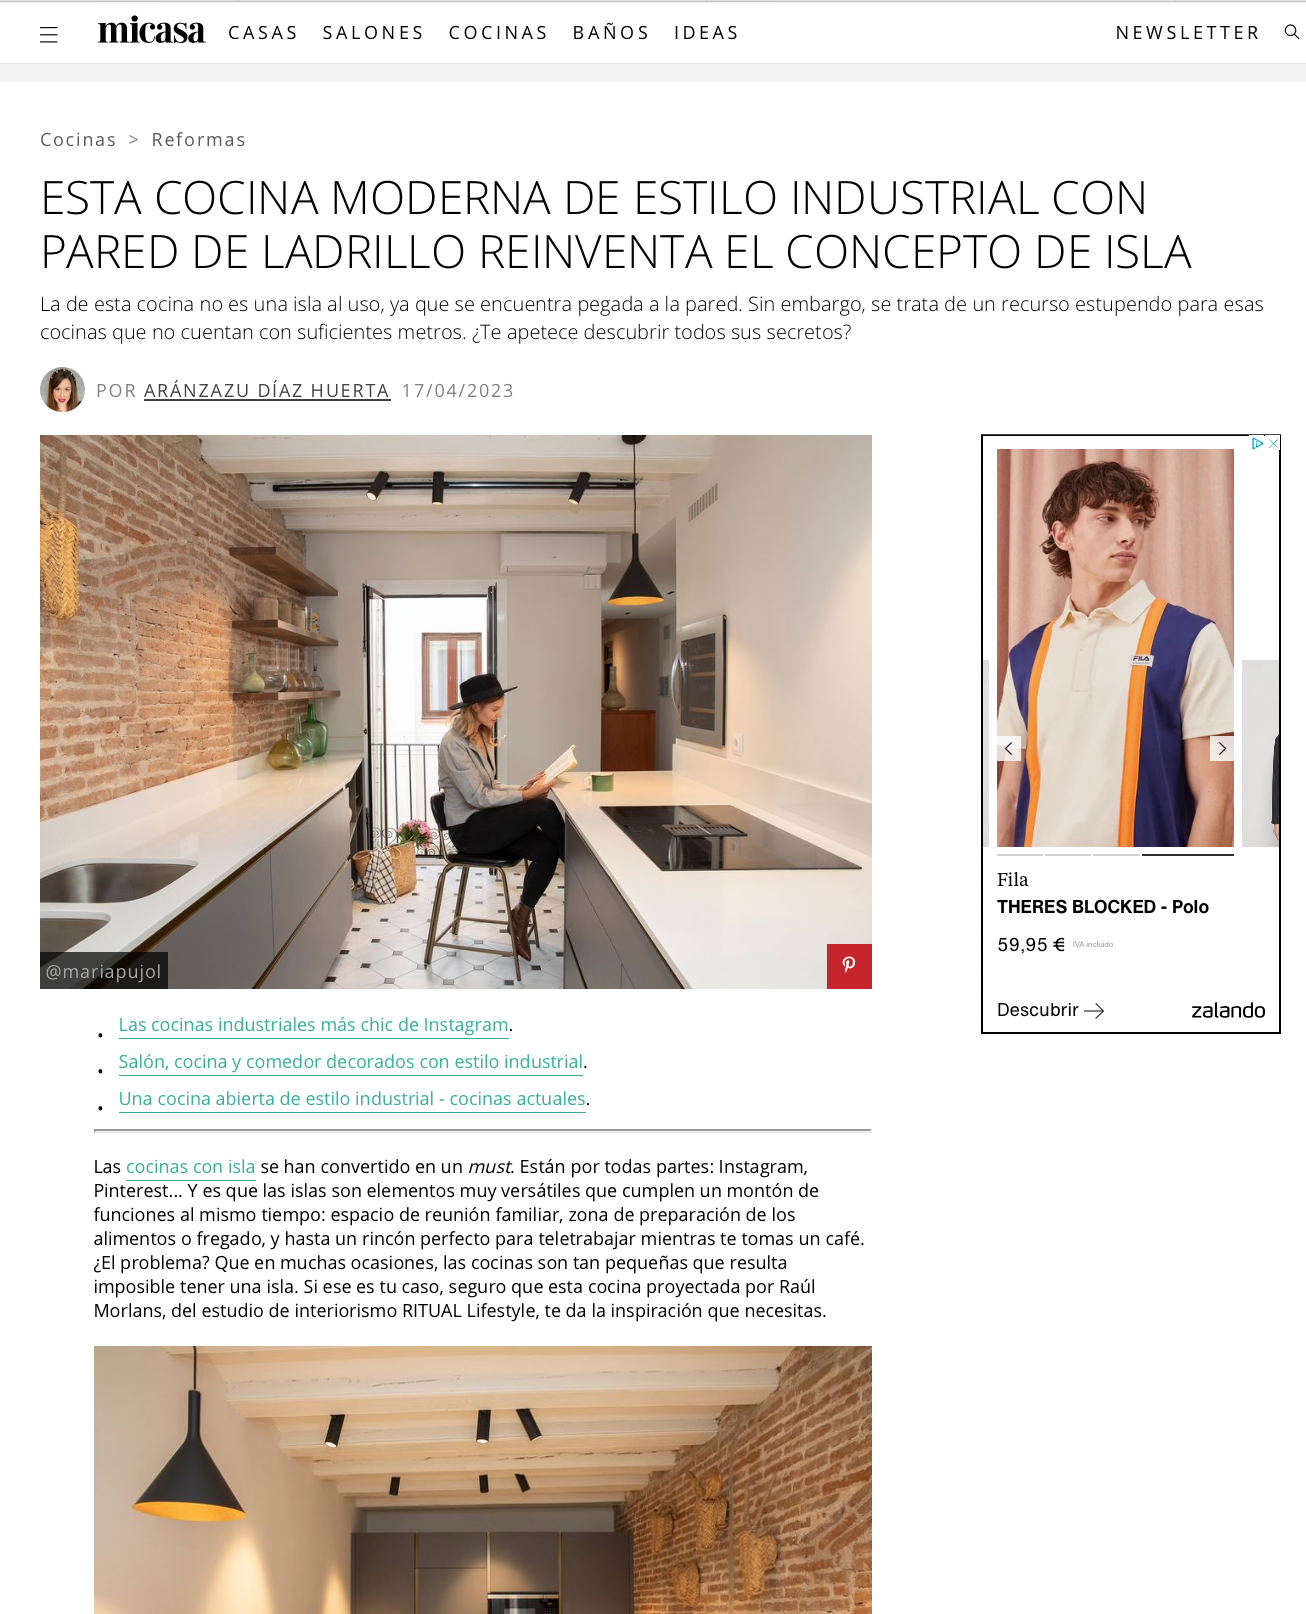 micasa mariapujol revista digital Magazine reformas casas ritual lifestyle interiorismo